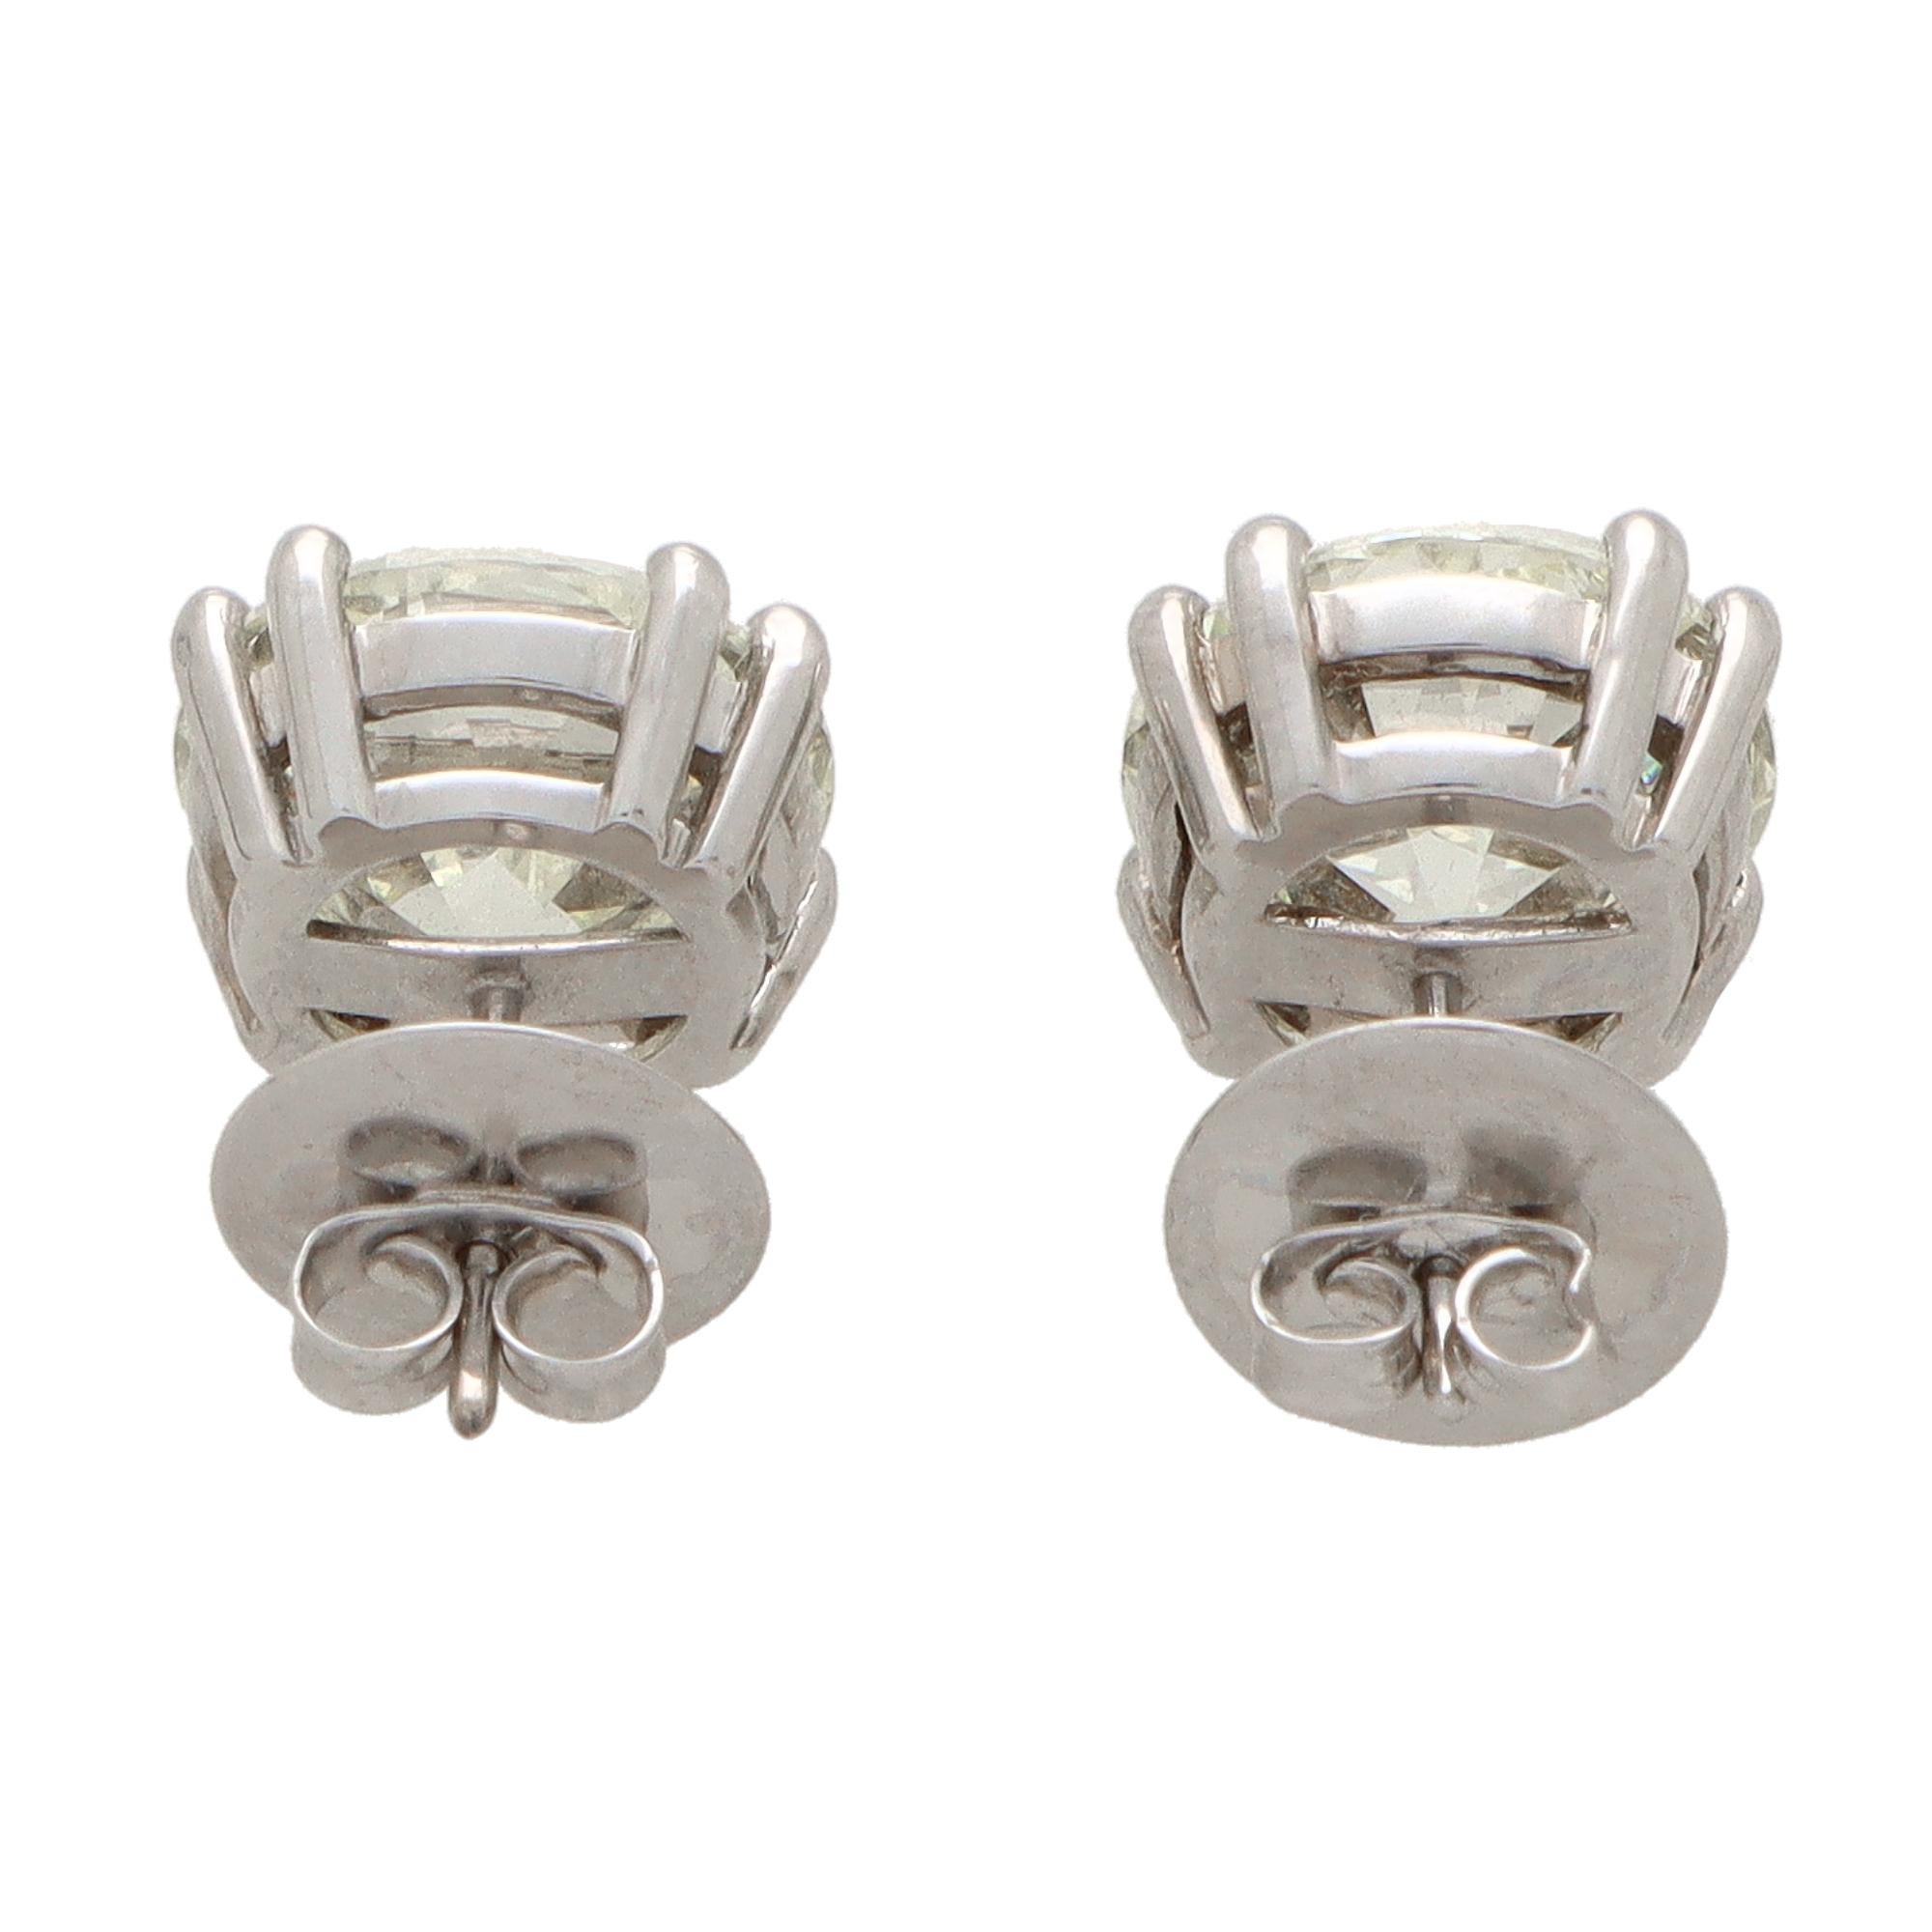 Victorian Solitaire 11.66 Carat Old European Cut Diamond Stud Earrings in Platinum